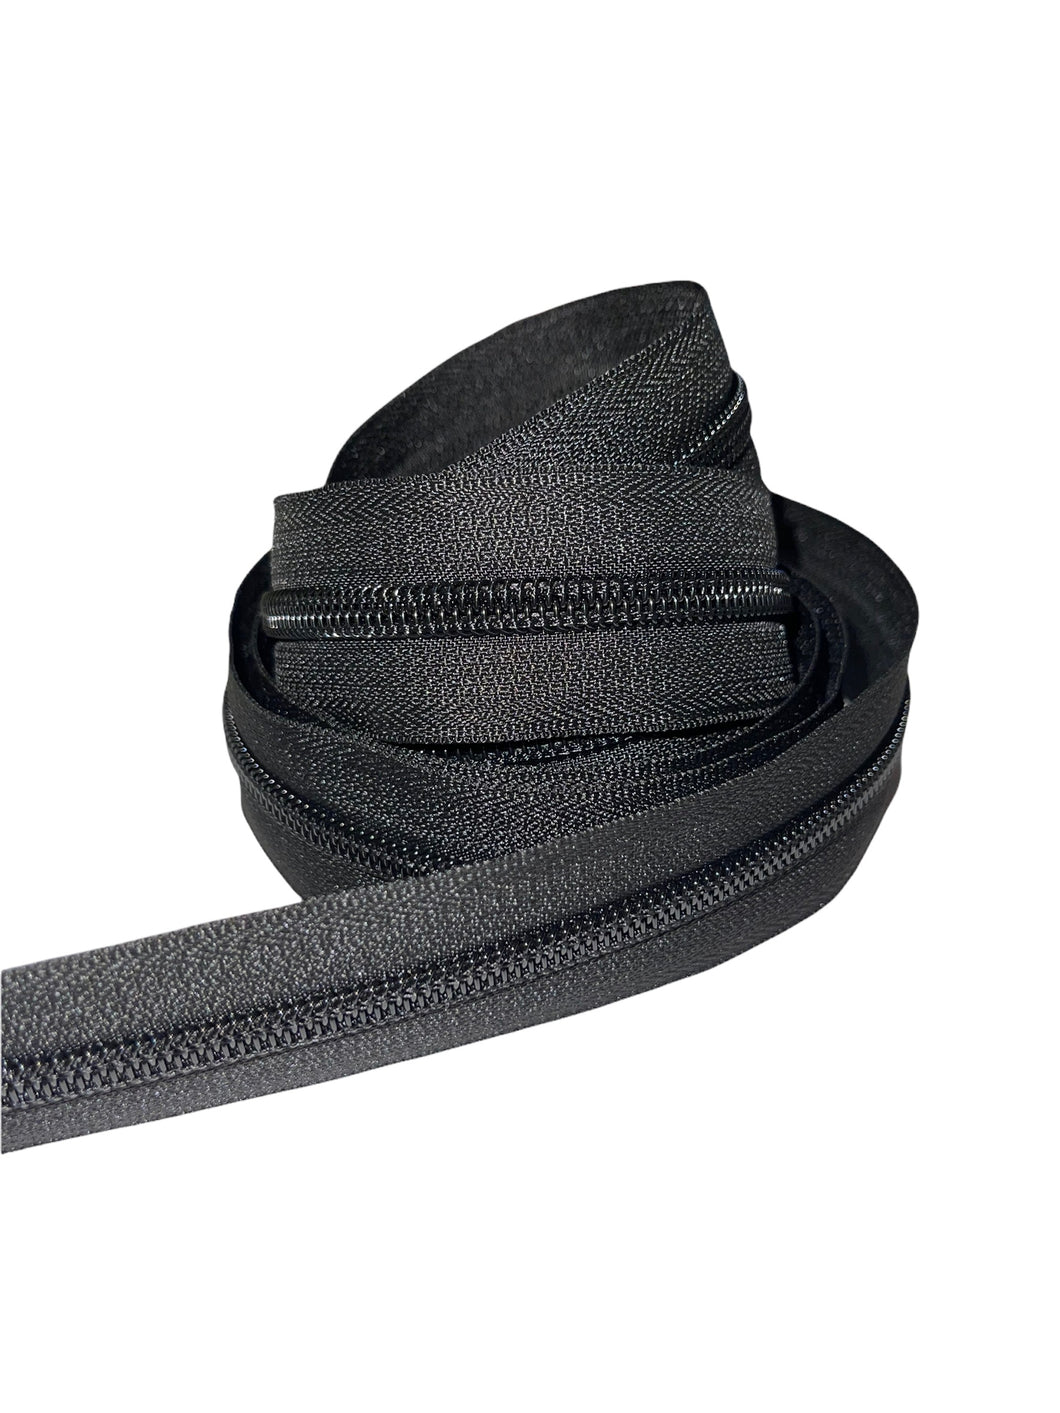 #5 Nylon Zipper Tape - Black on Black - by the yard